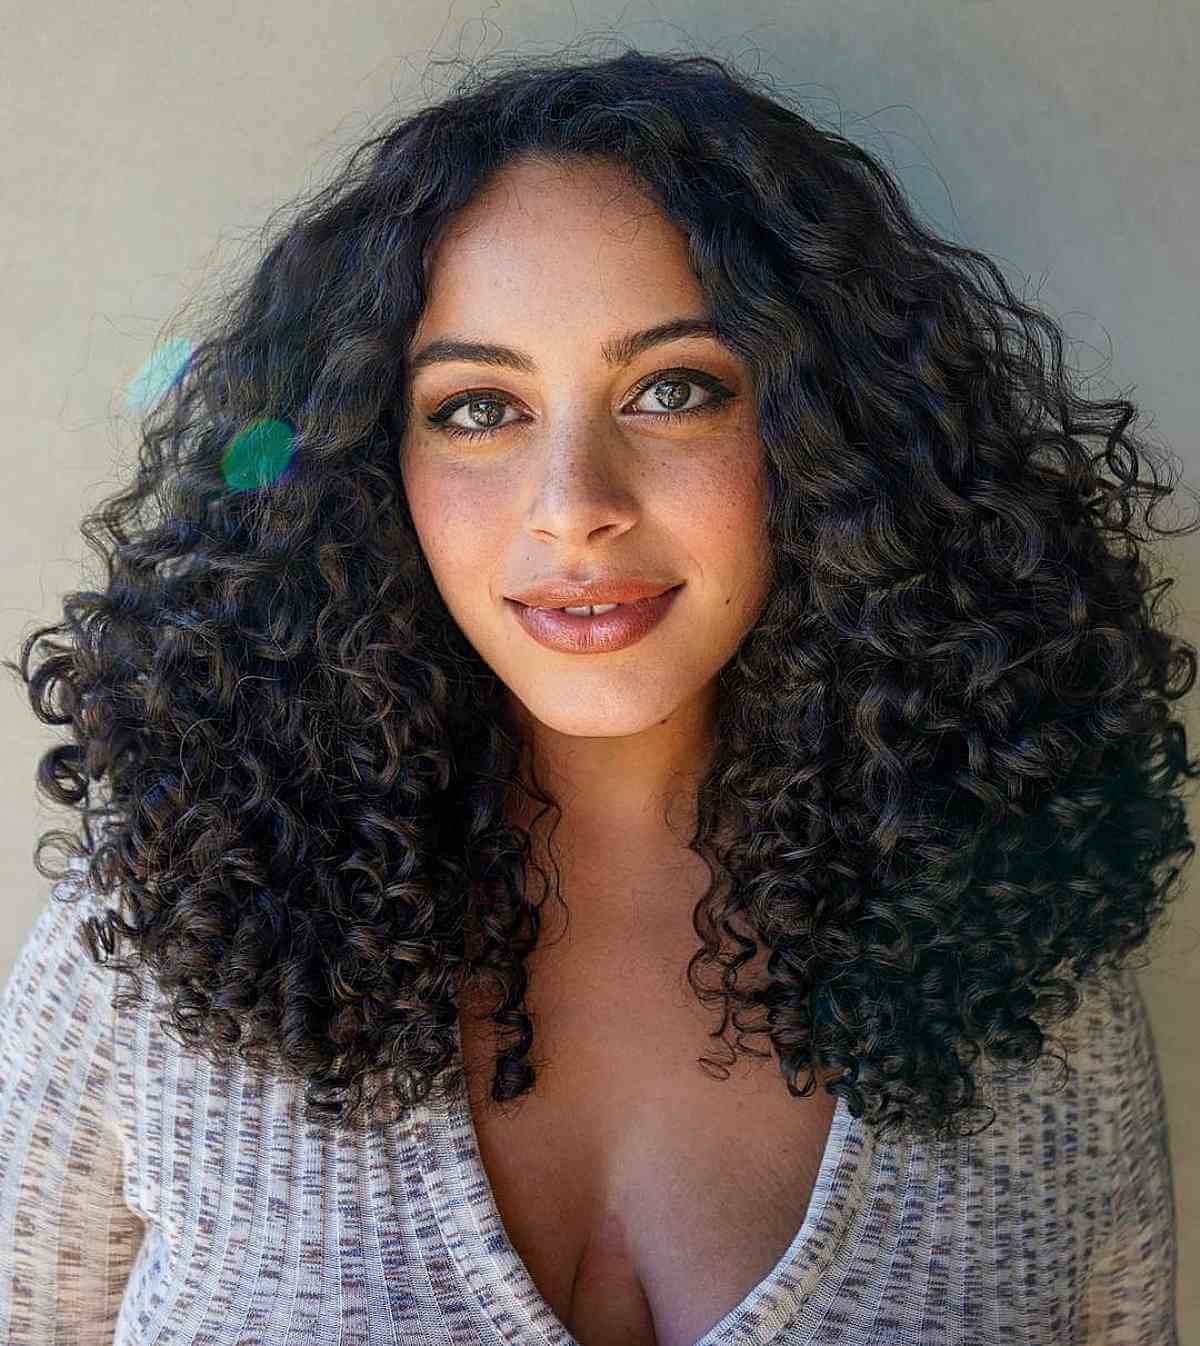 Effortless Natural Curls for Medium-Length Hair